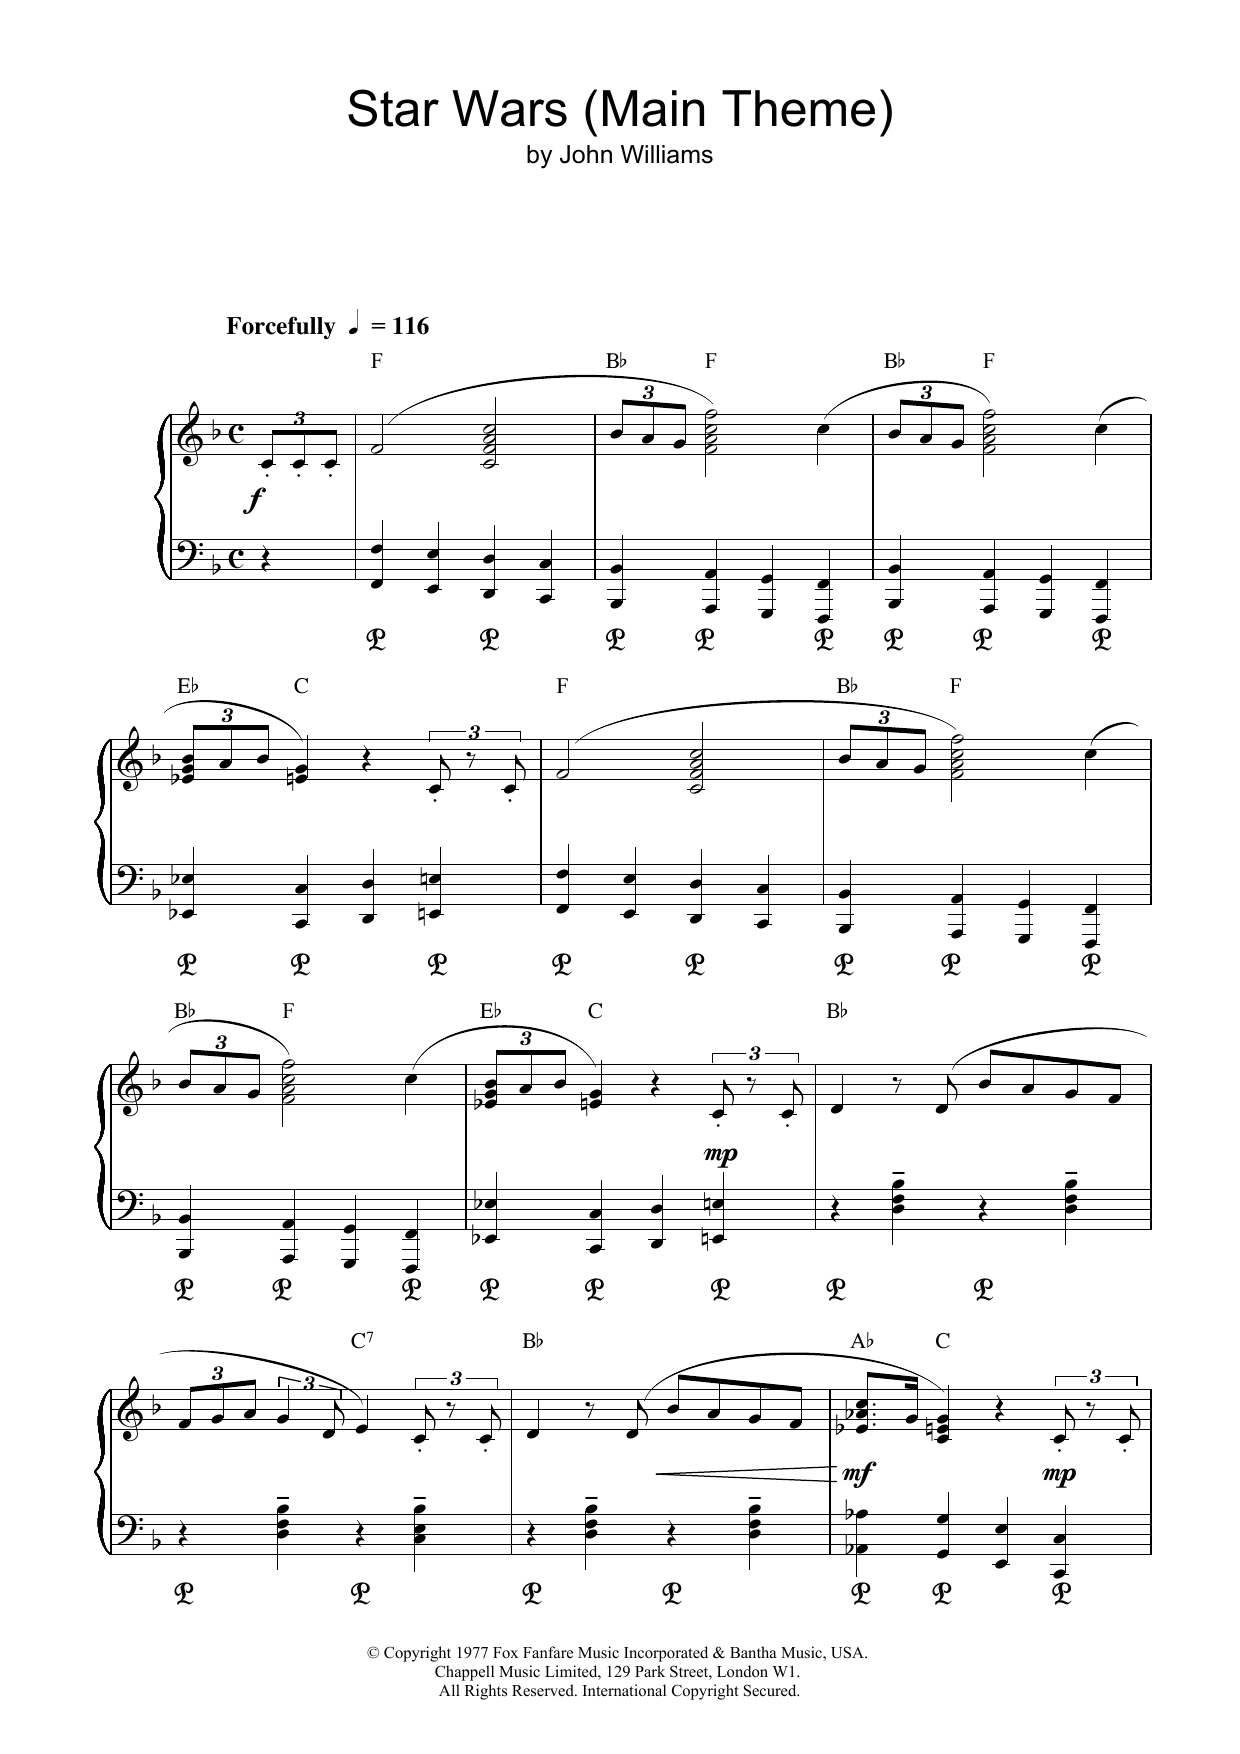 John Williams Star Wars (Main Theme) Sheet Music Notes & Chords for Ukulele - Download or Print PDF